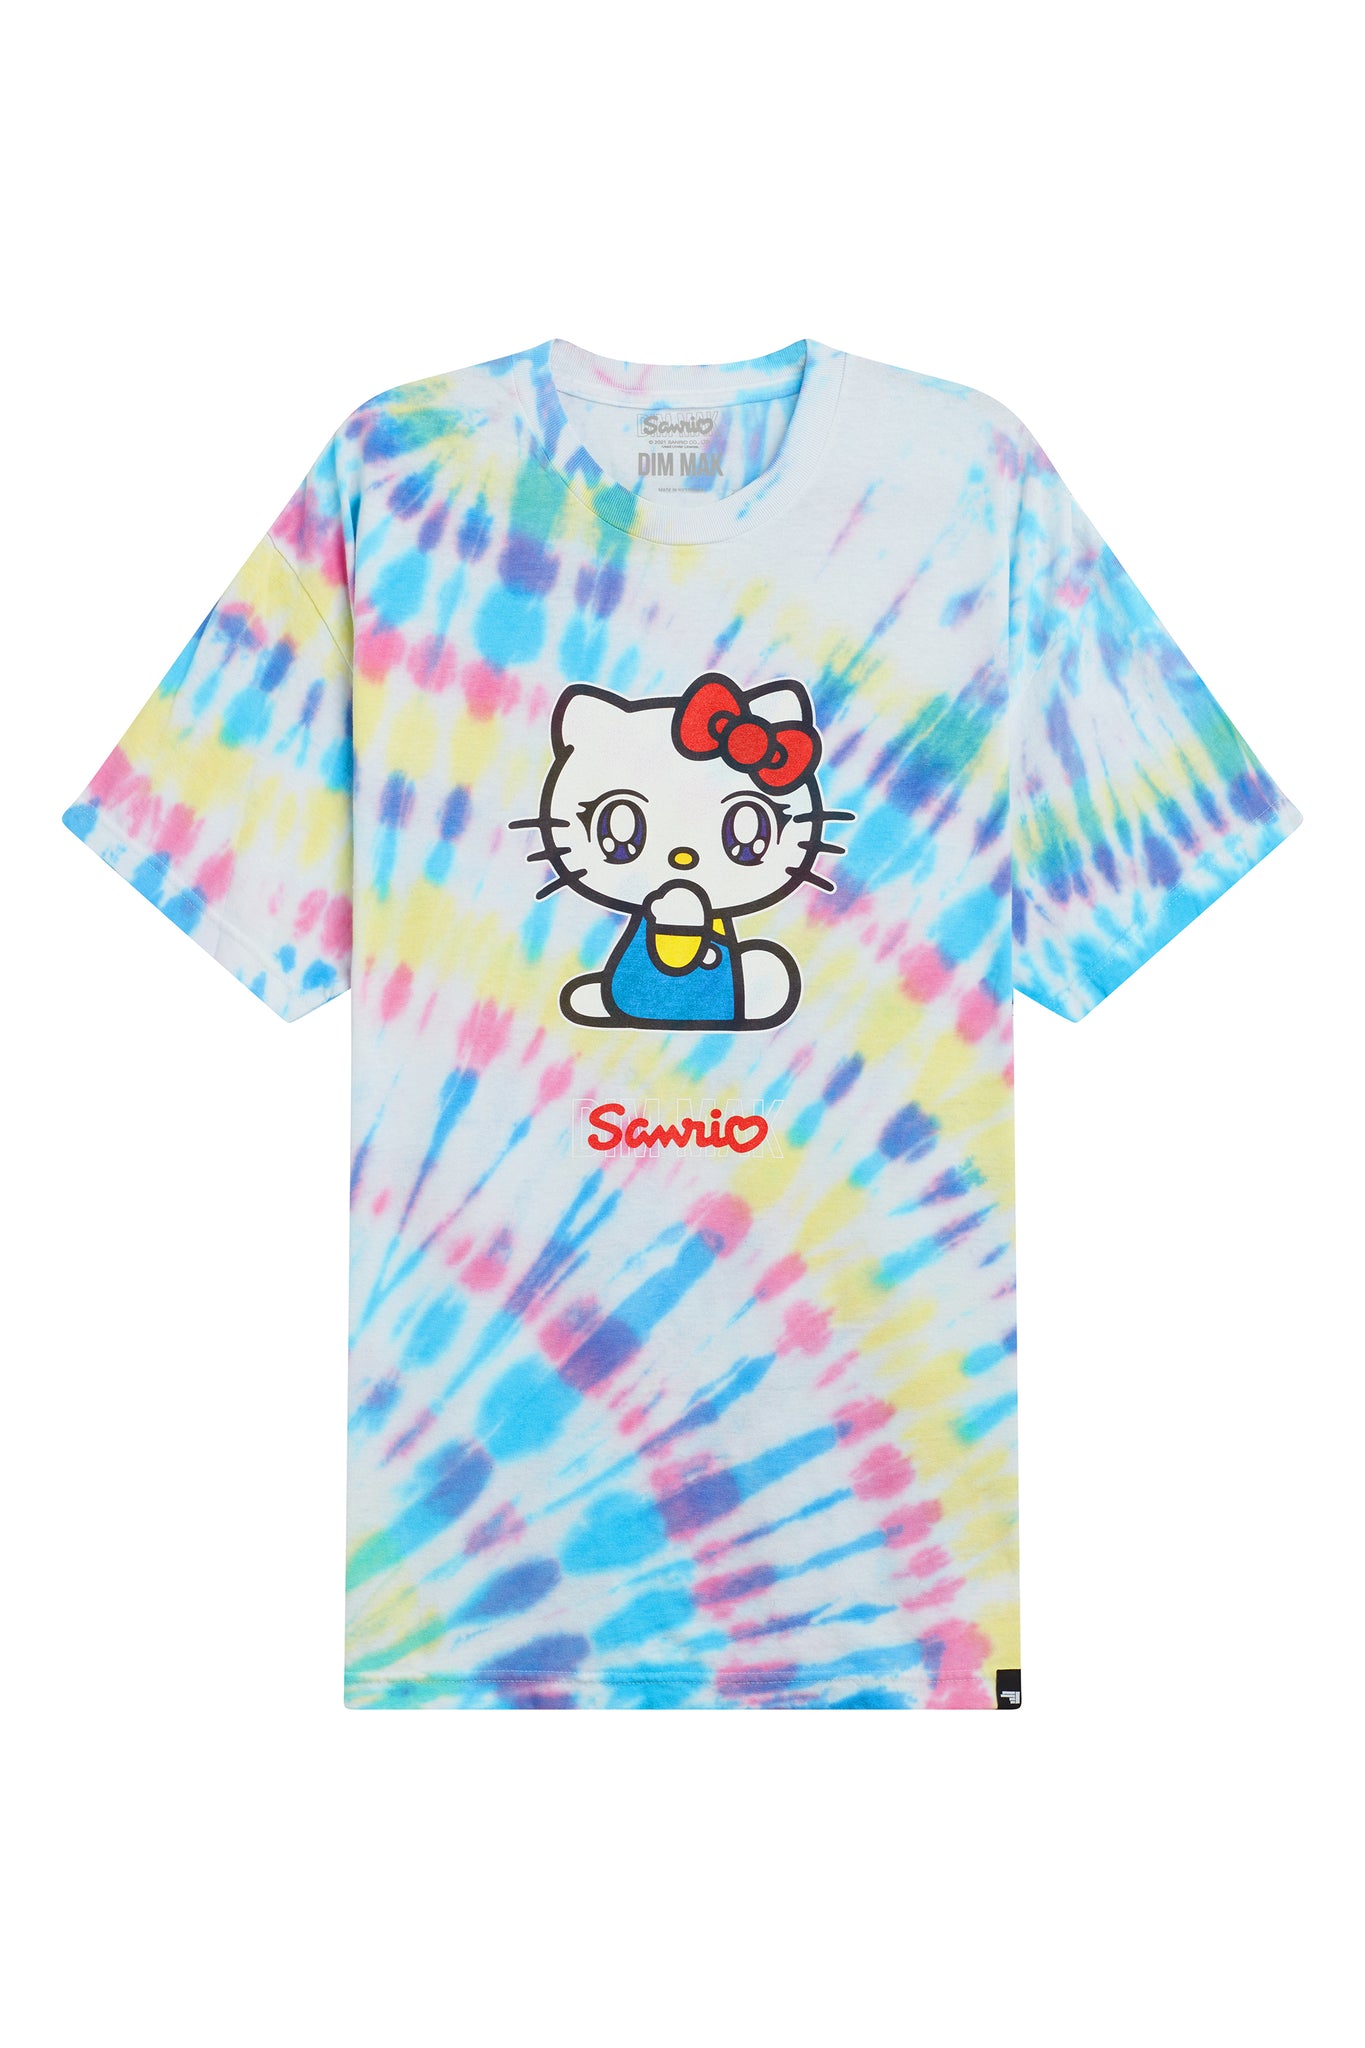 Dim Mak x Sanrio - Hello Kitty Daydream Tee - Spectrum Tie Dye